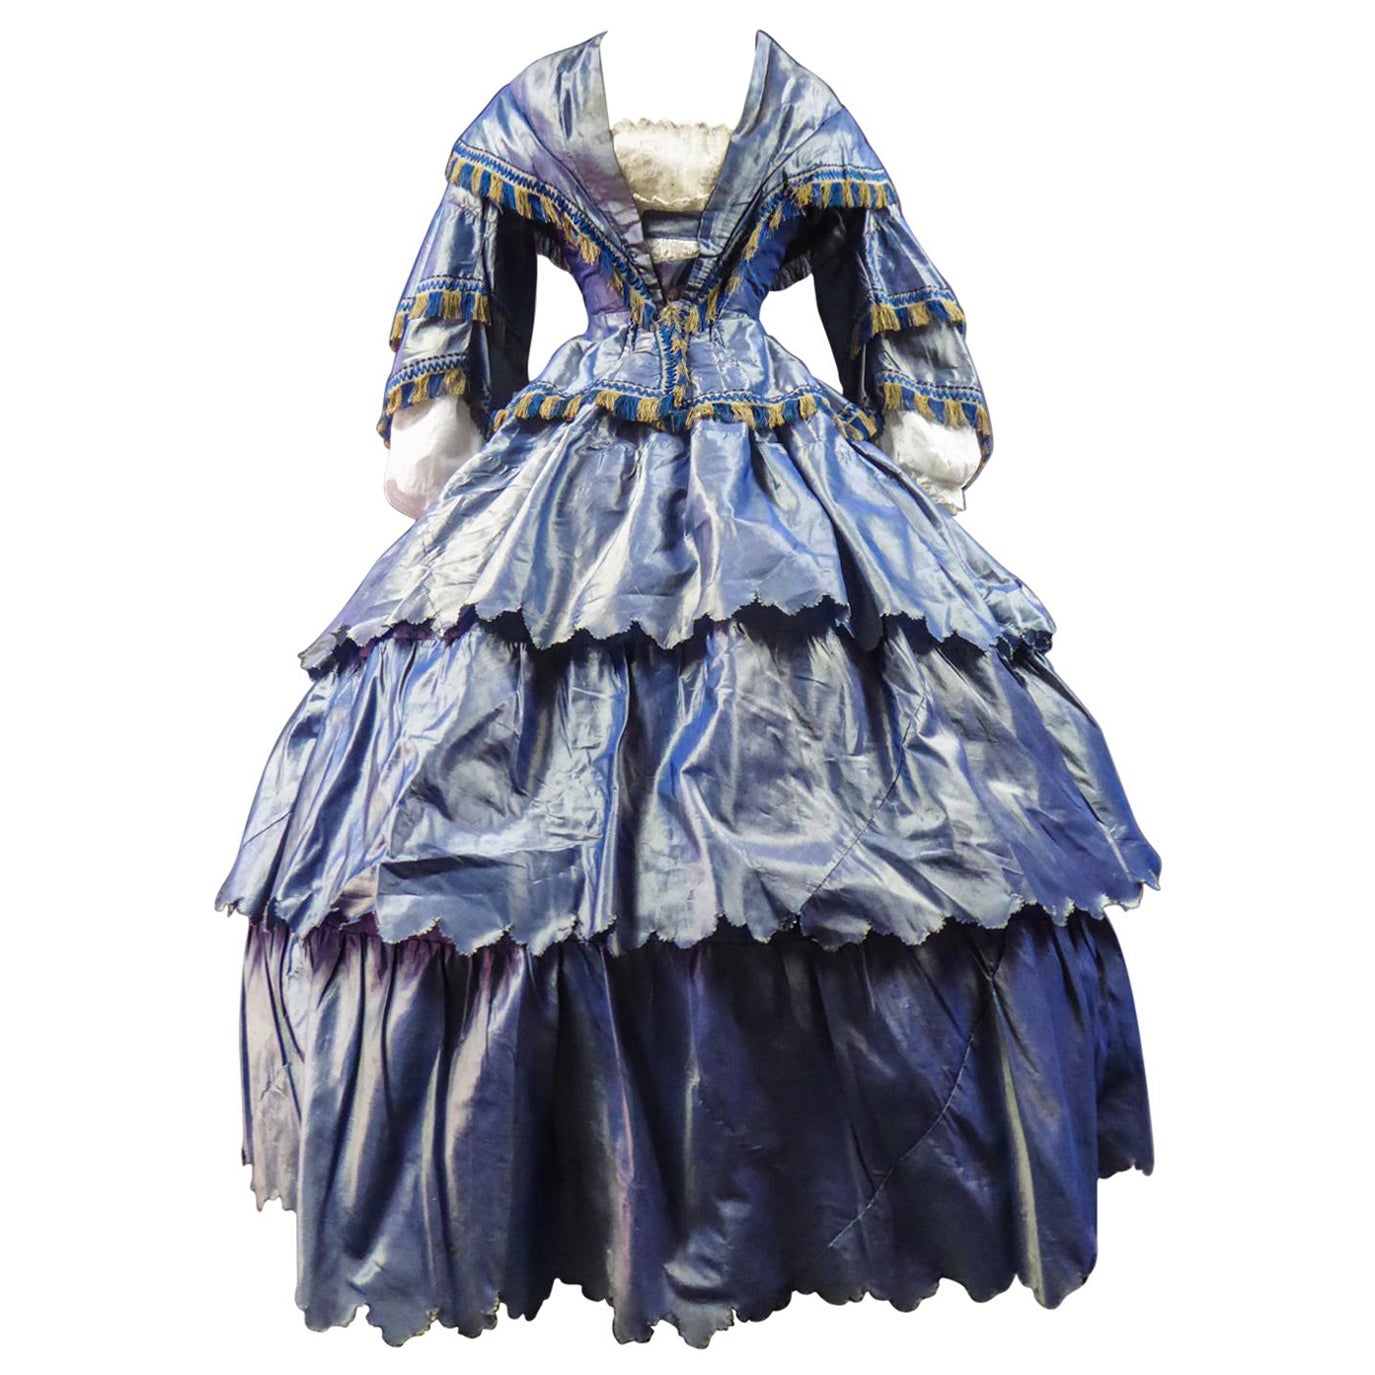 A French Crinoline Changing Taffeta Dress  Napoléon III Period Circa 1855.